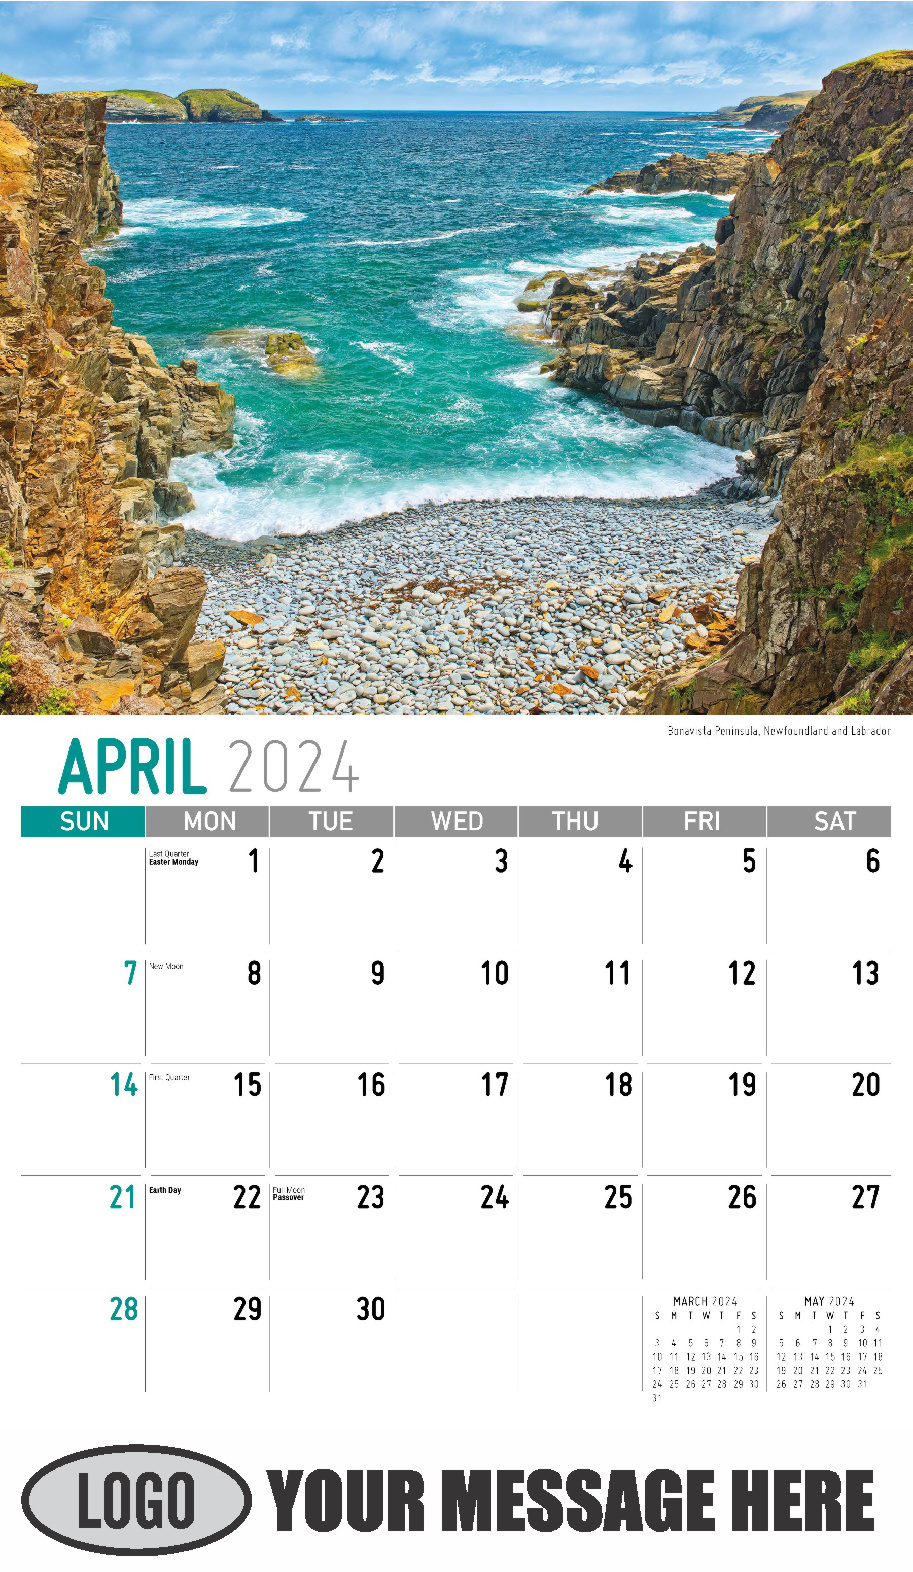 Atlantic Canada Scenic 2024 Business Promotion Calendar - April